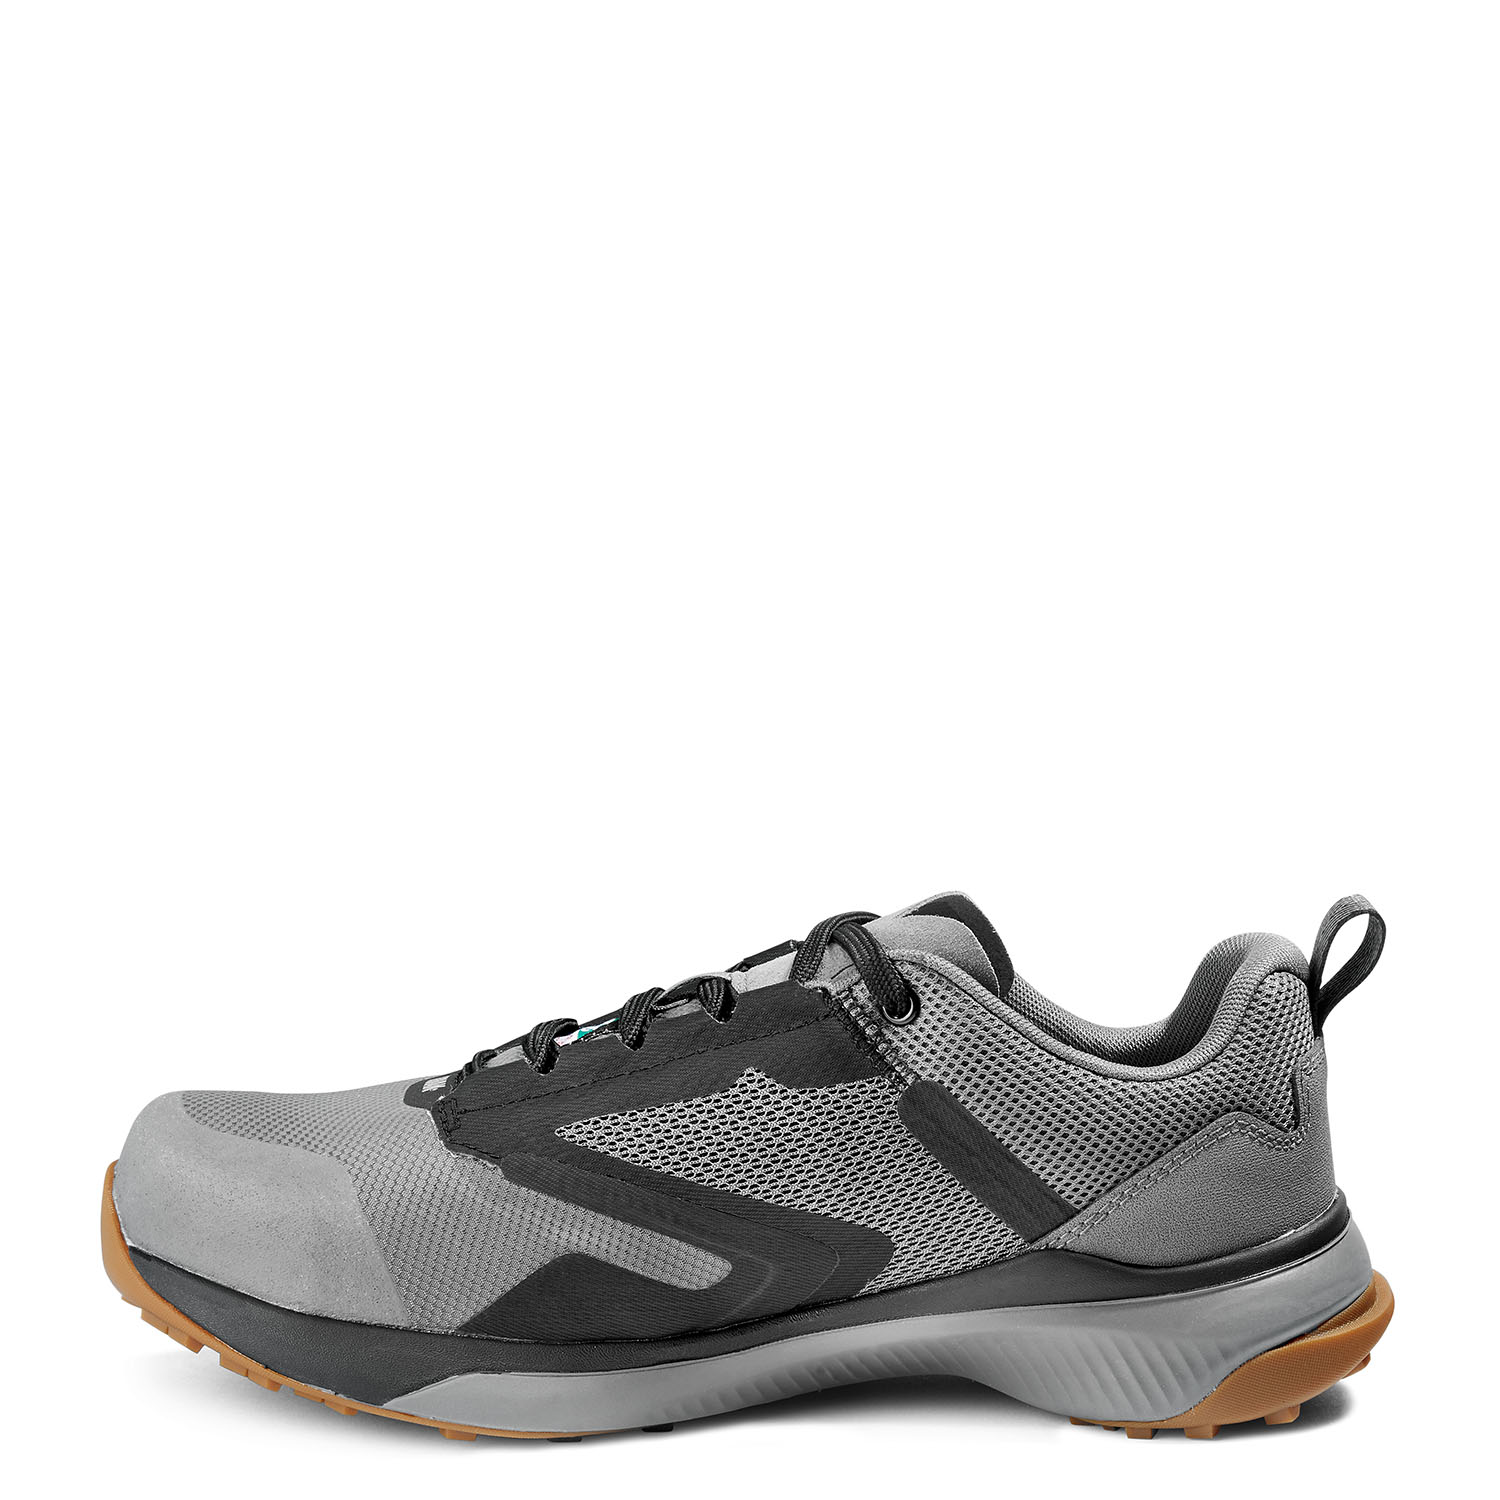 Kodiak Swift Trail Men's Composite Toe Athletic Work Shoes - Grey/Blue